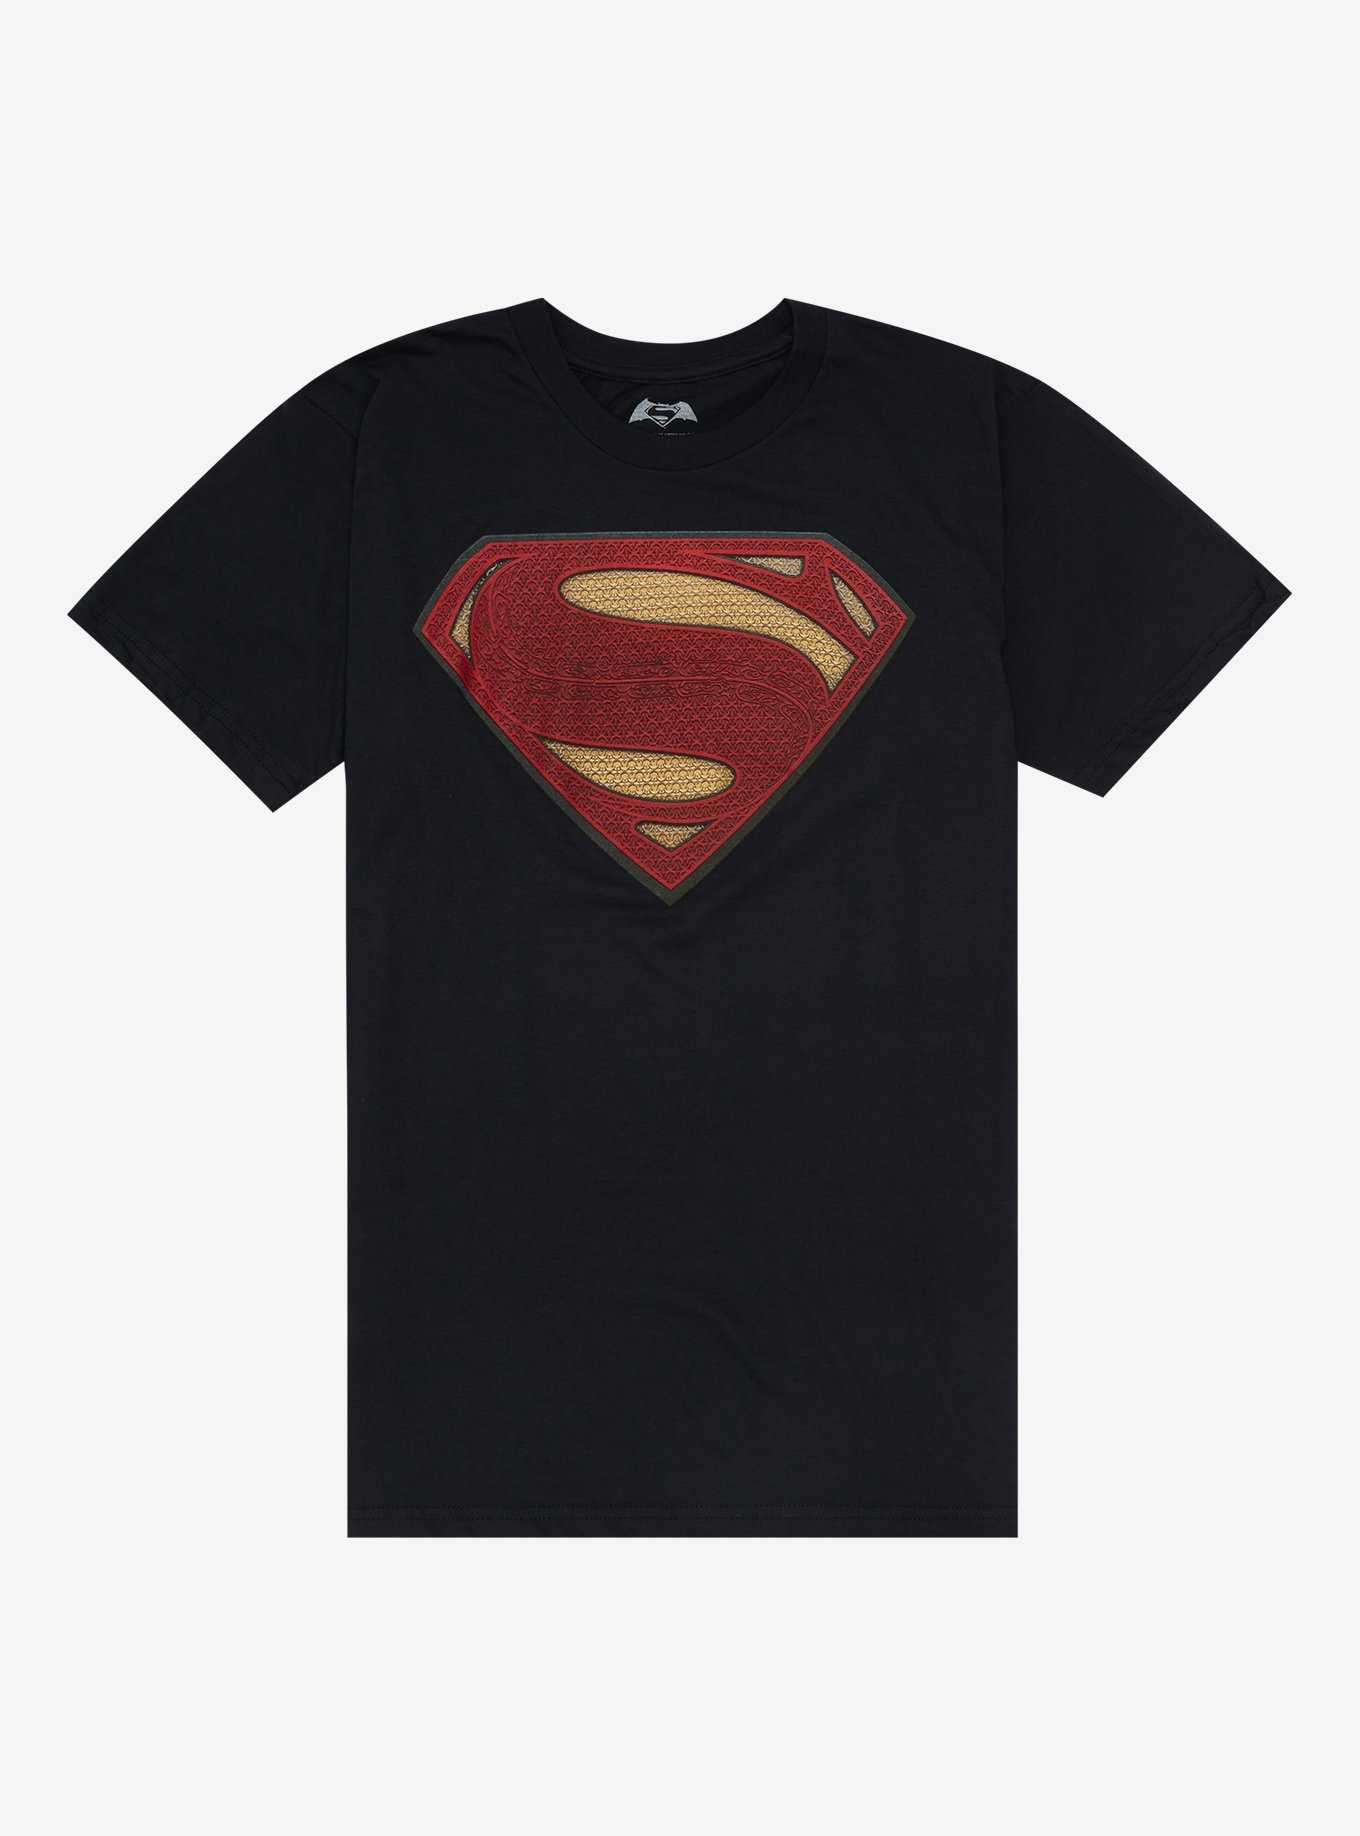 Superman Women's T-Shirt (Pink/Black) – Gym Shop Hero